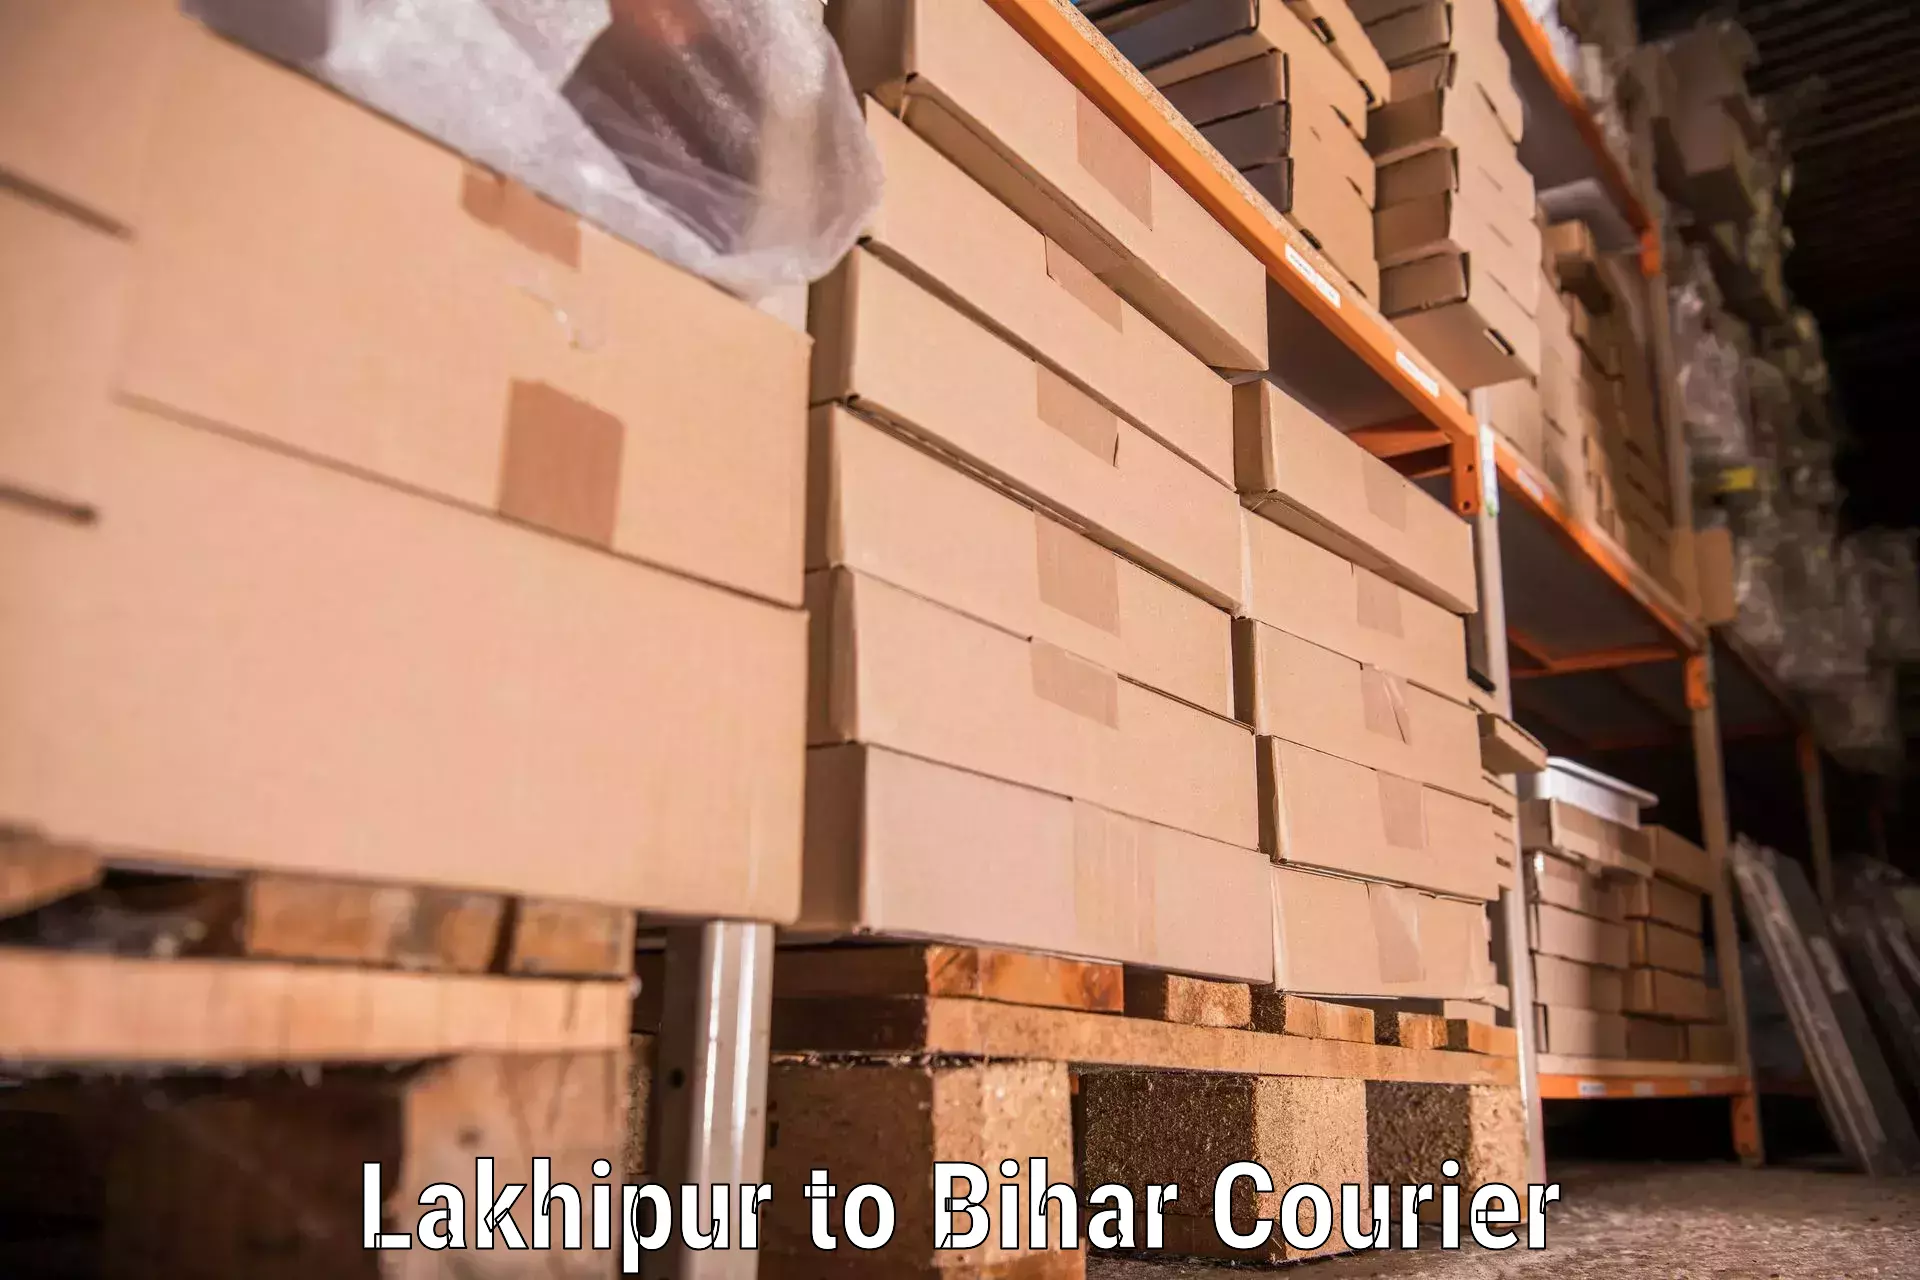 Furniture transport specialists Lakhipur to Bihar